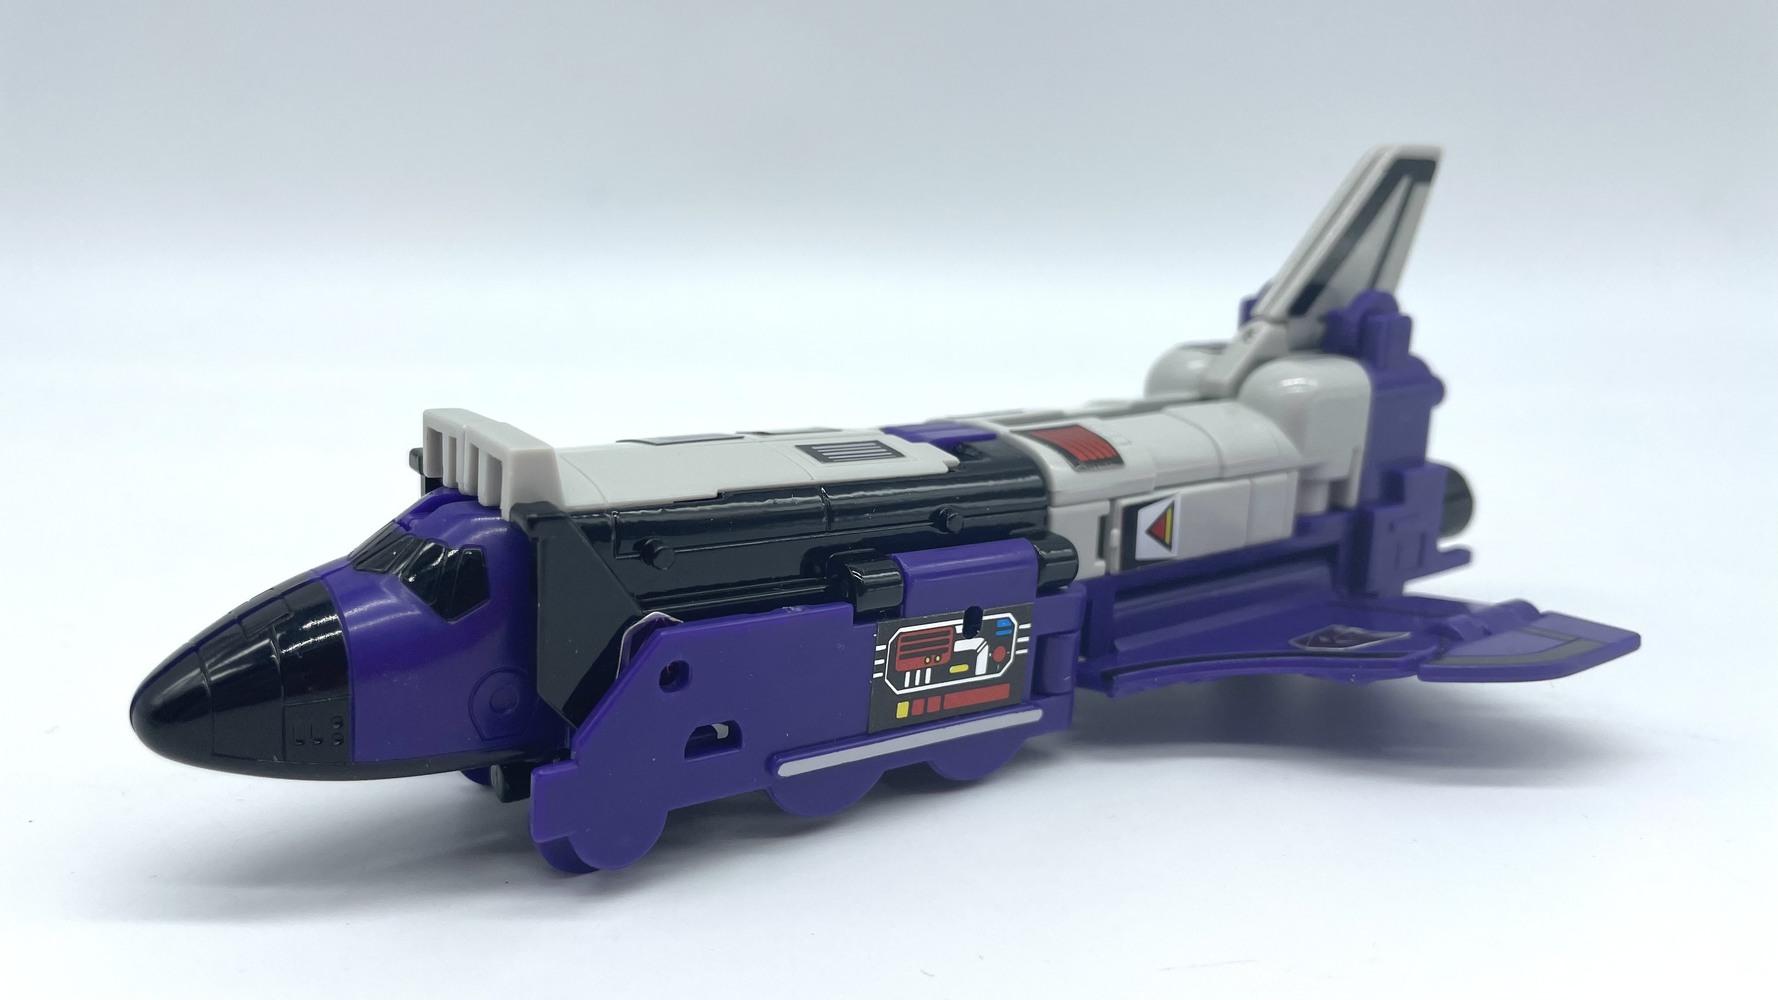 Hasbro G1 1985 Transformers Astrotrain